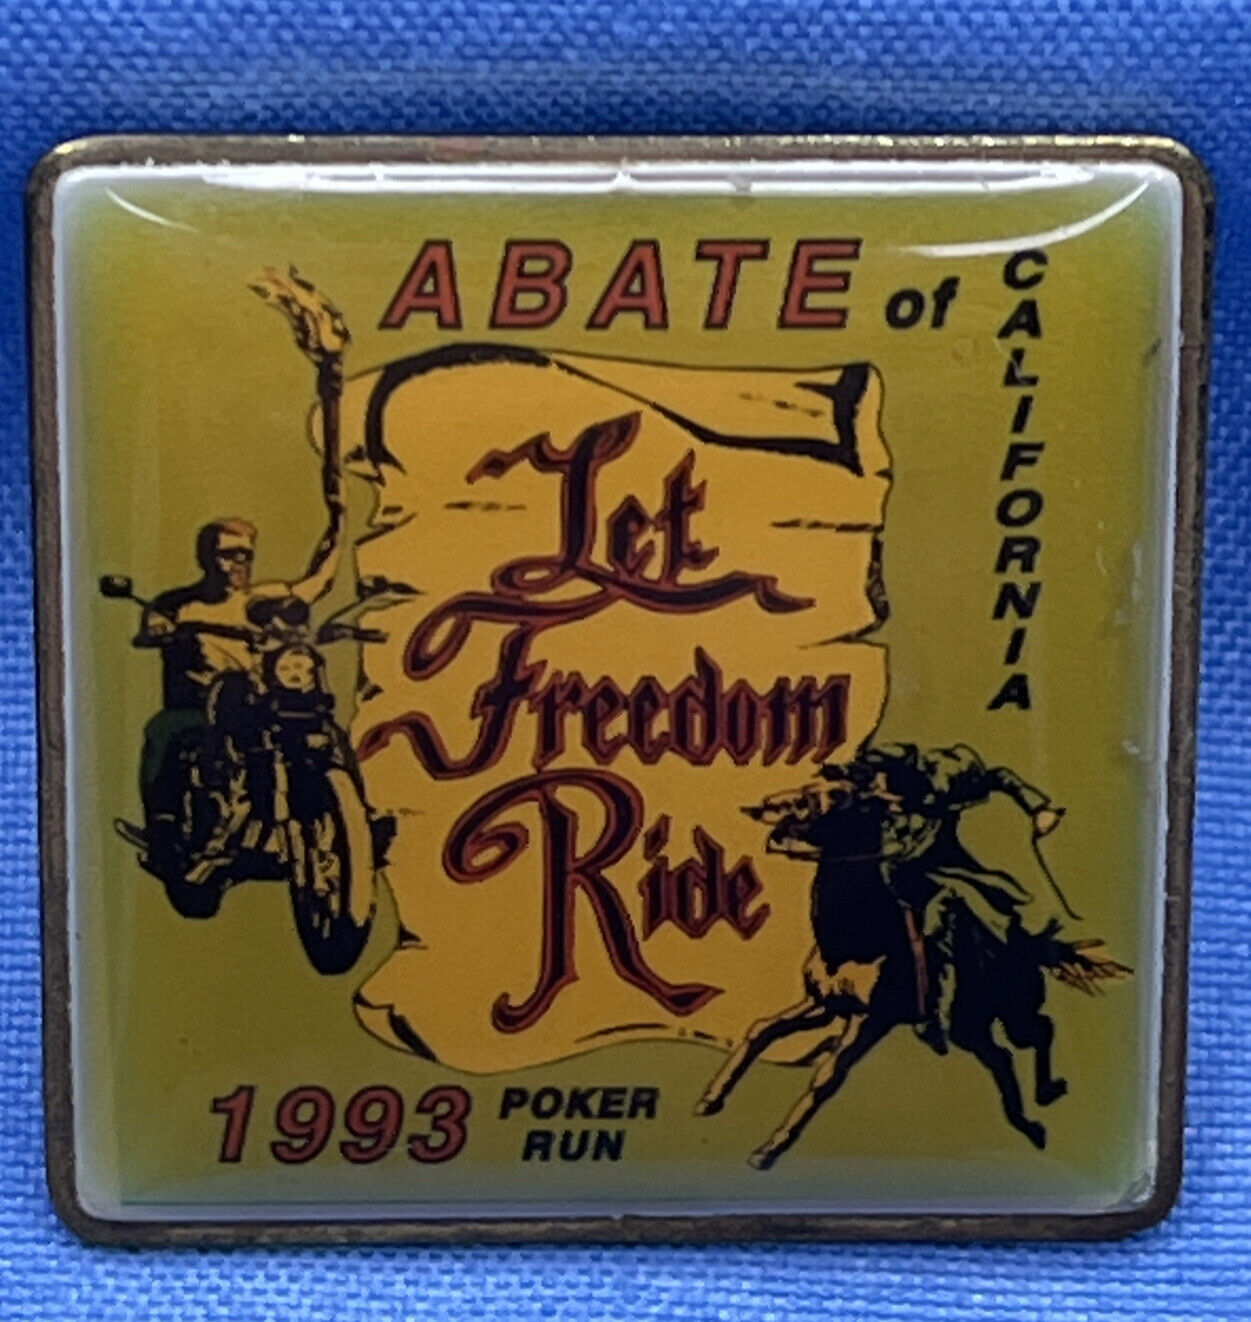 1993 ABATE  OF CALIFORNIA LET FREEDOM RIDE POKER RUN PIN ENAMAL